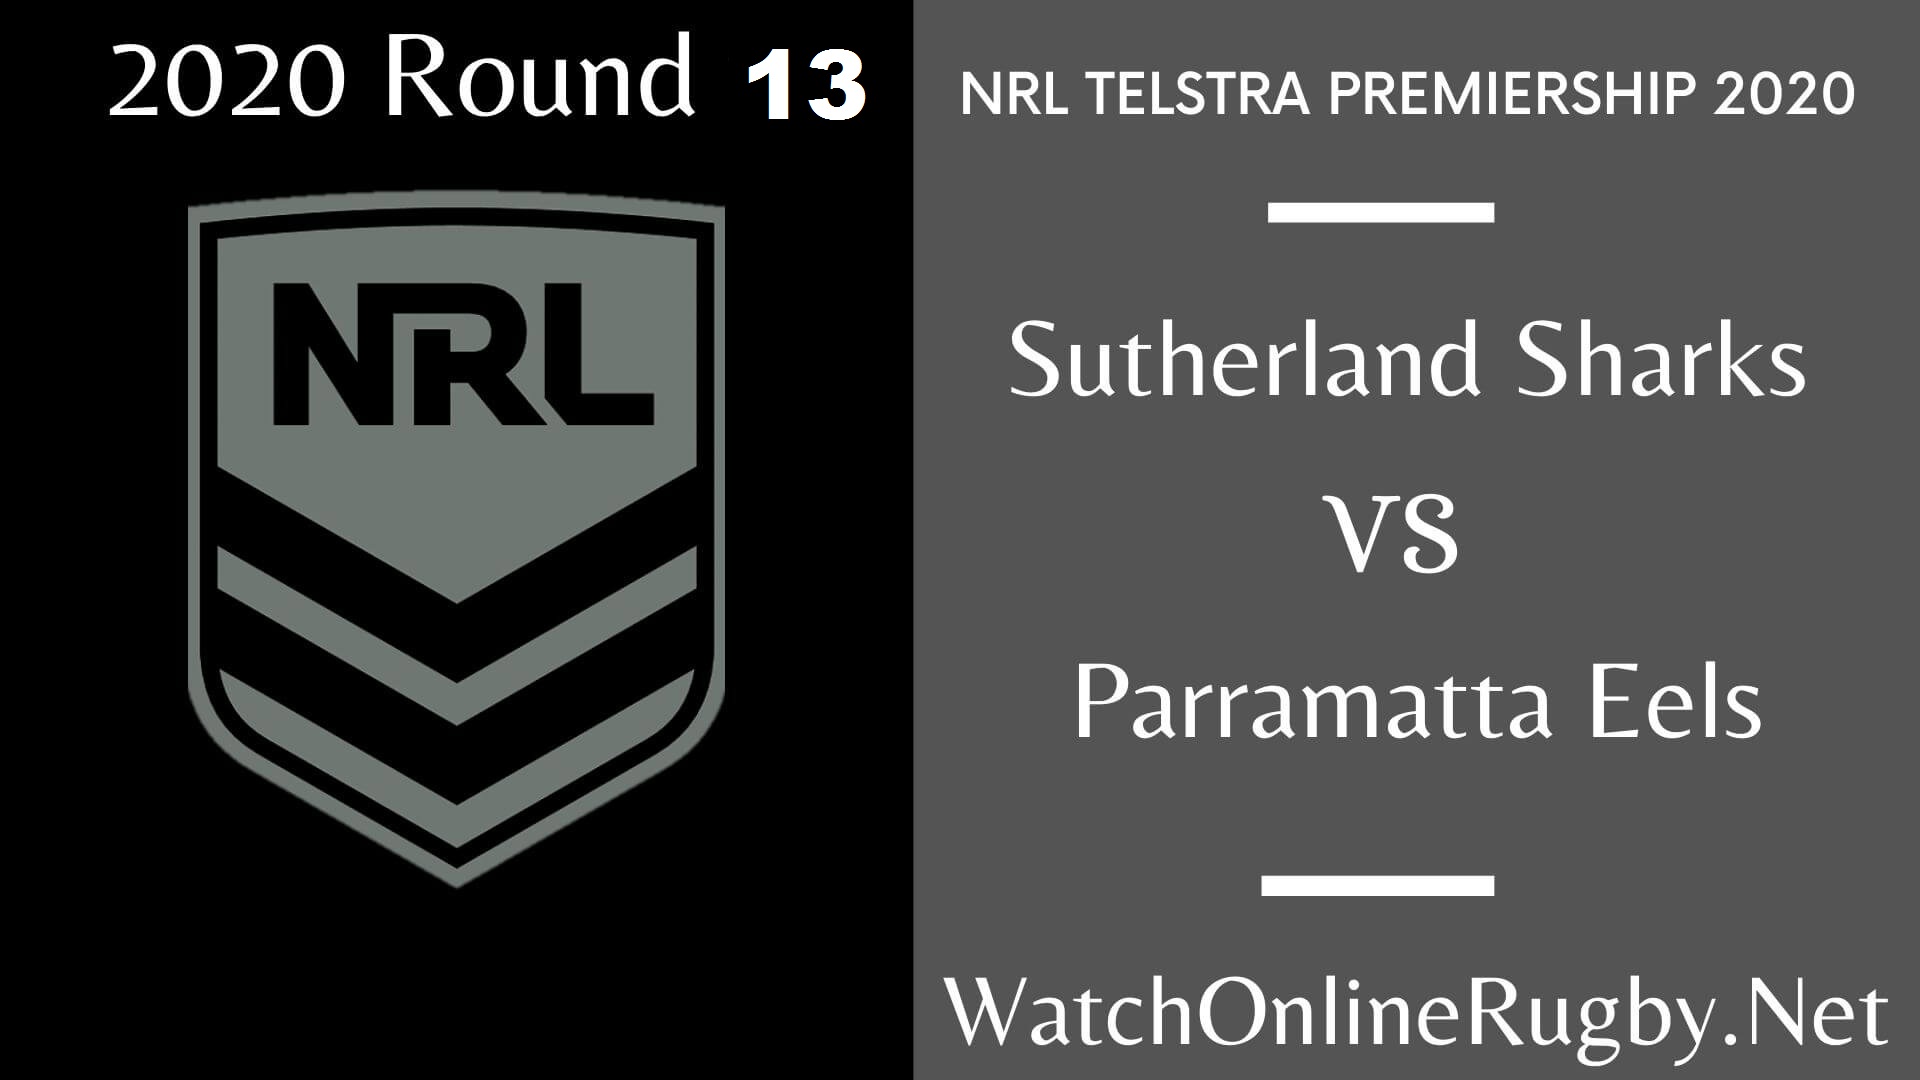 Sutherland Sharks Vs Parramatta Eels Highlights 2020 Round 13 NRL Rugby